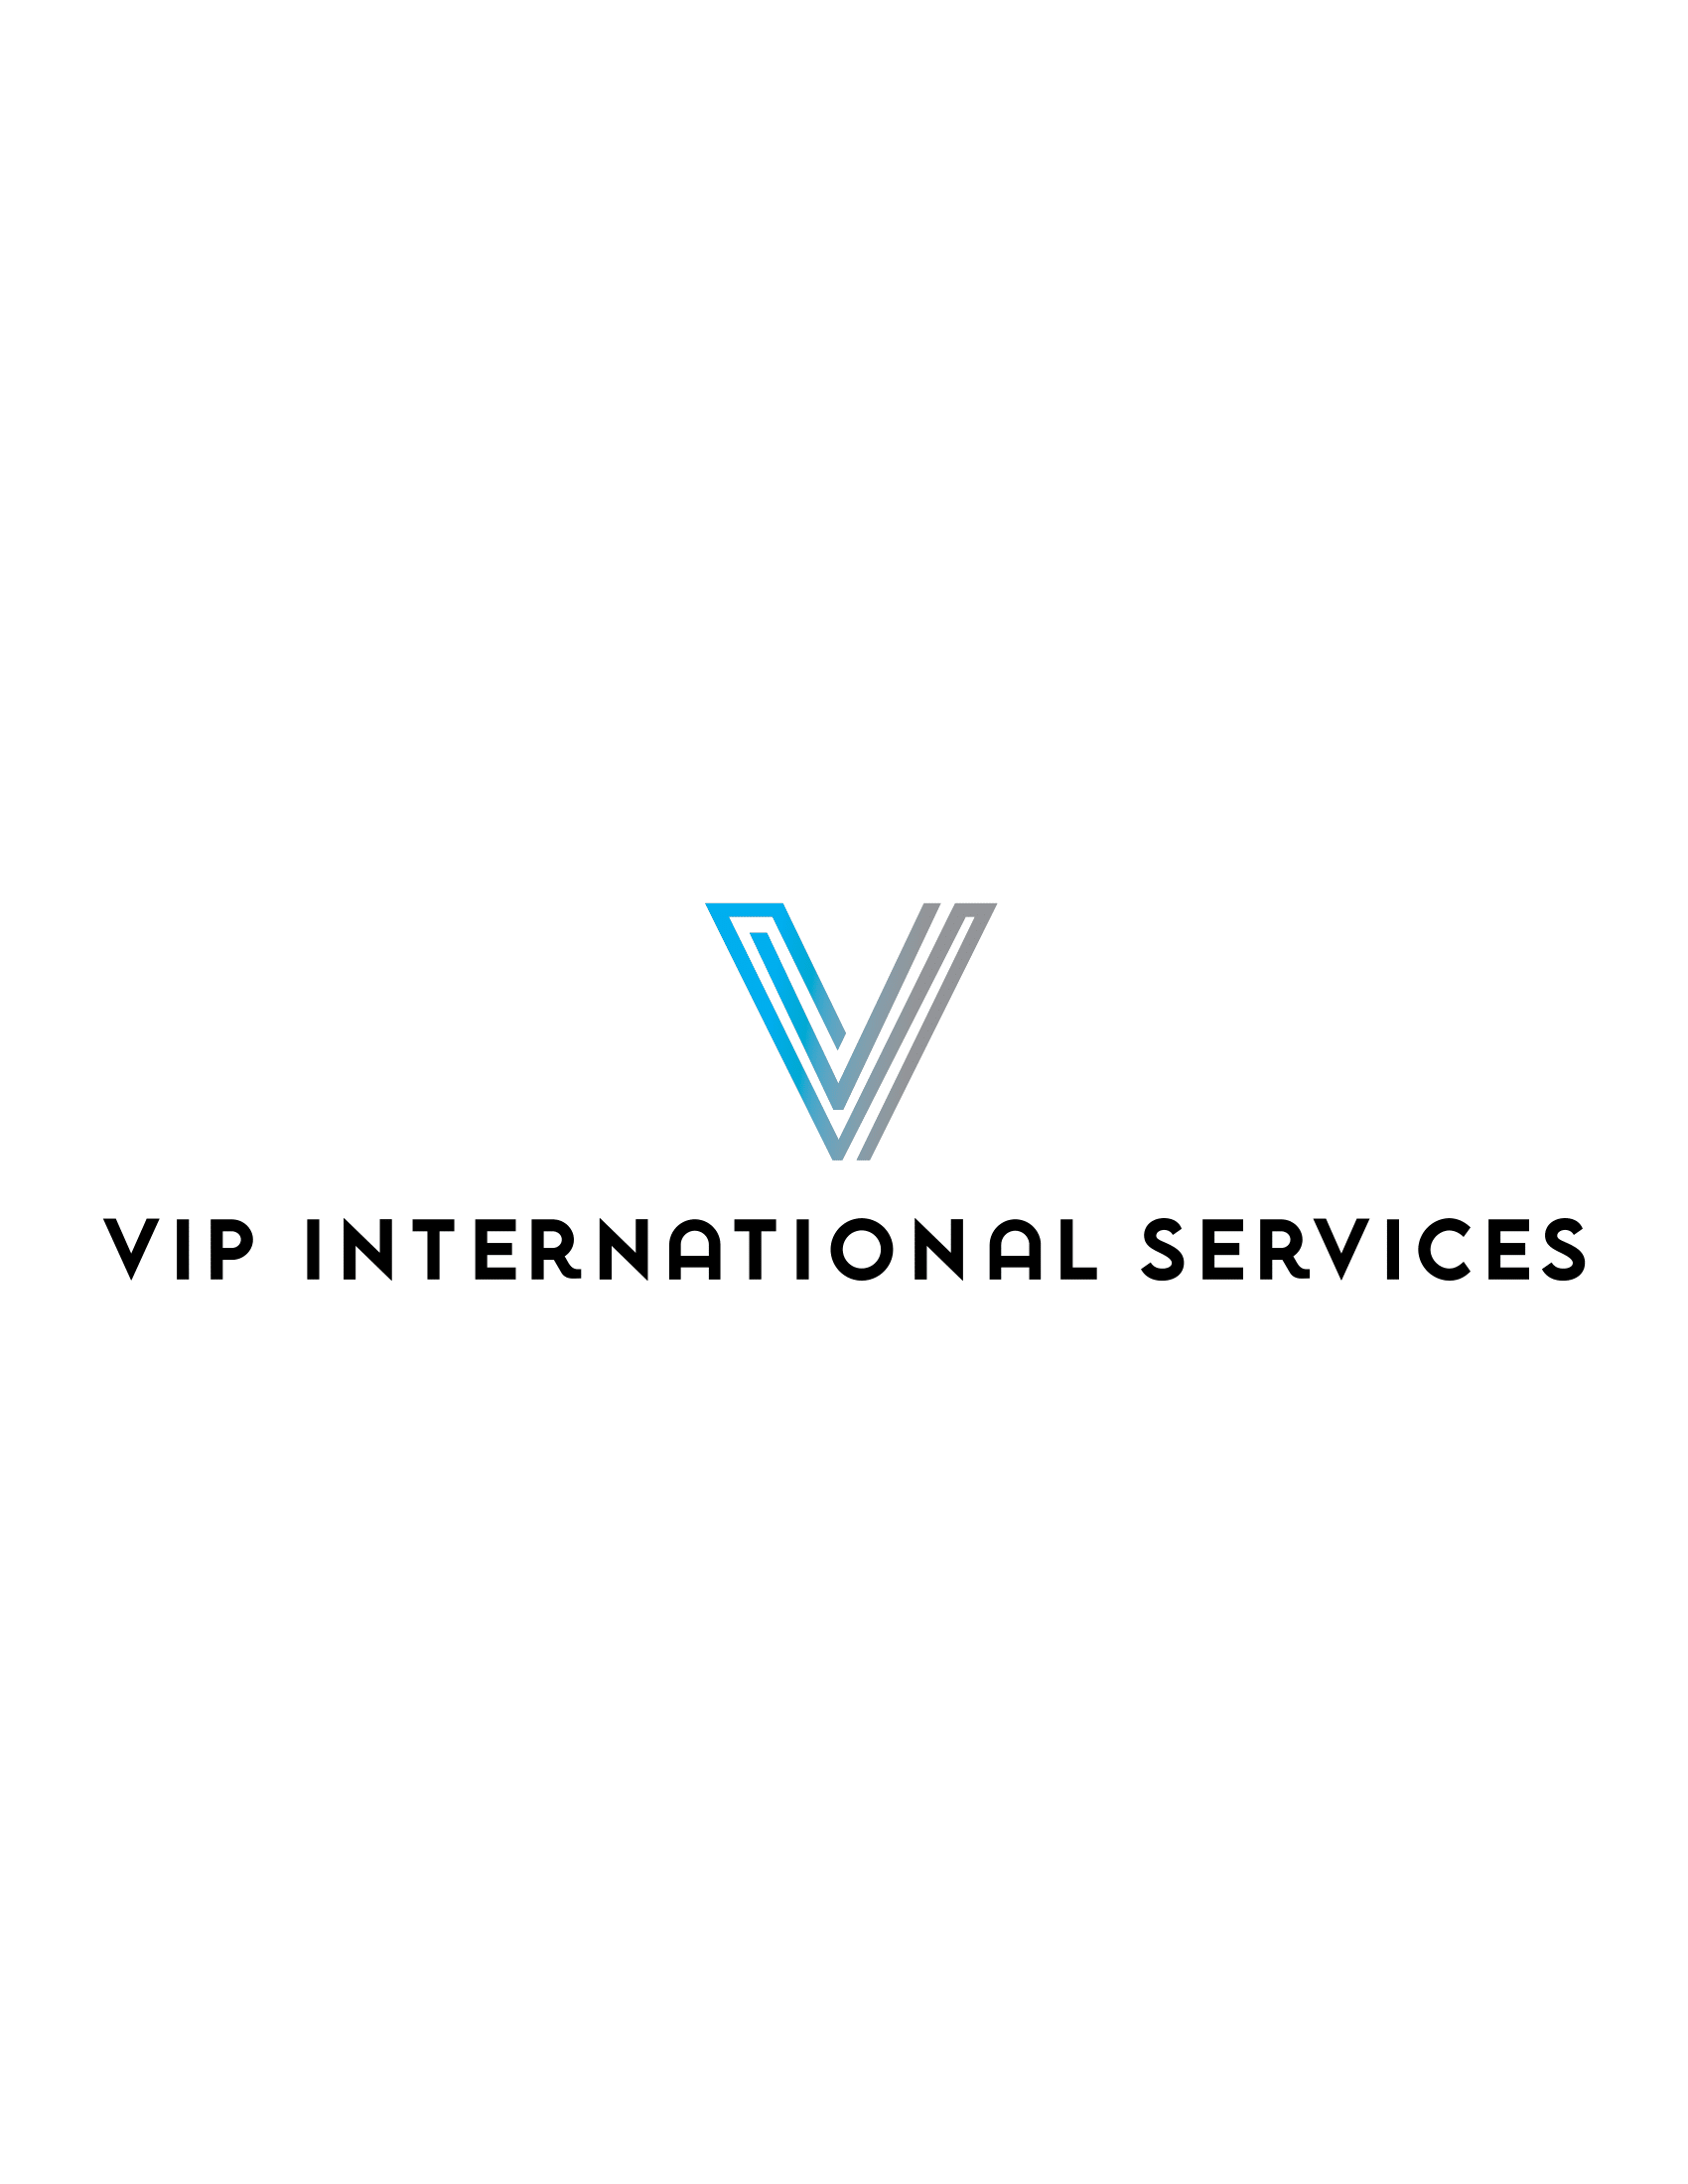 VIP International Services